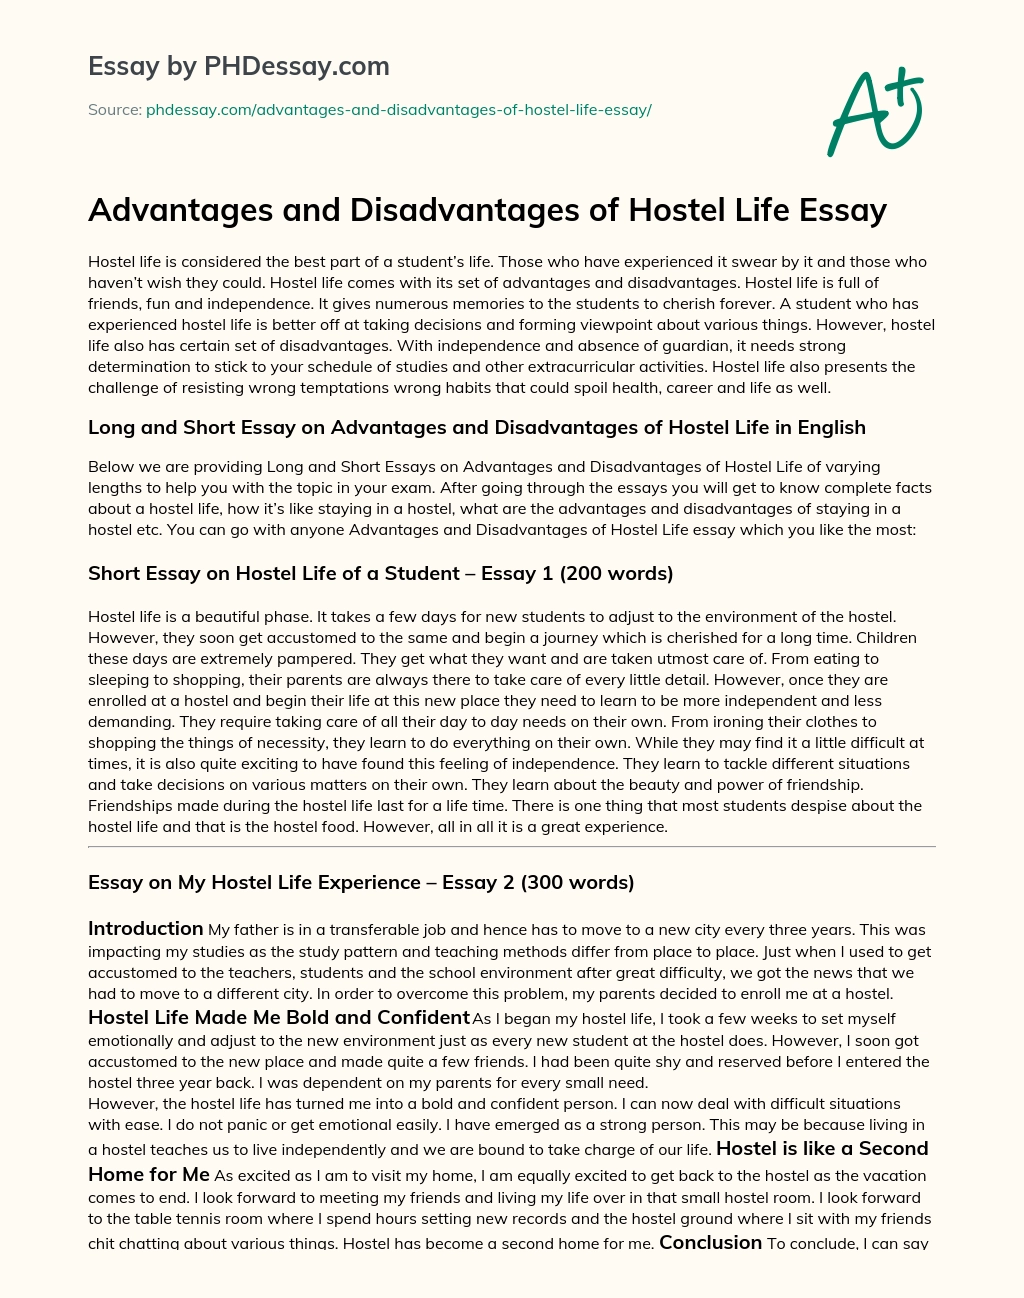 Advantages and Disadvantages of Hostel Life Essay essay